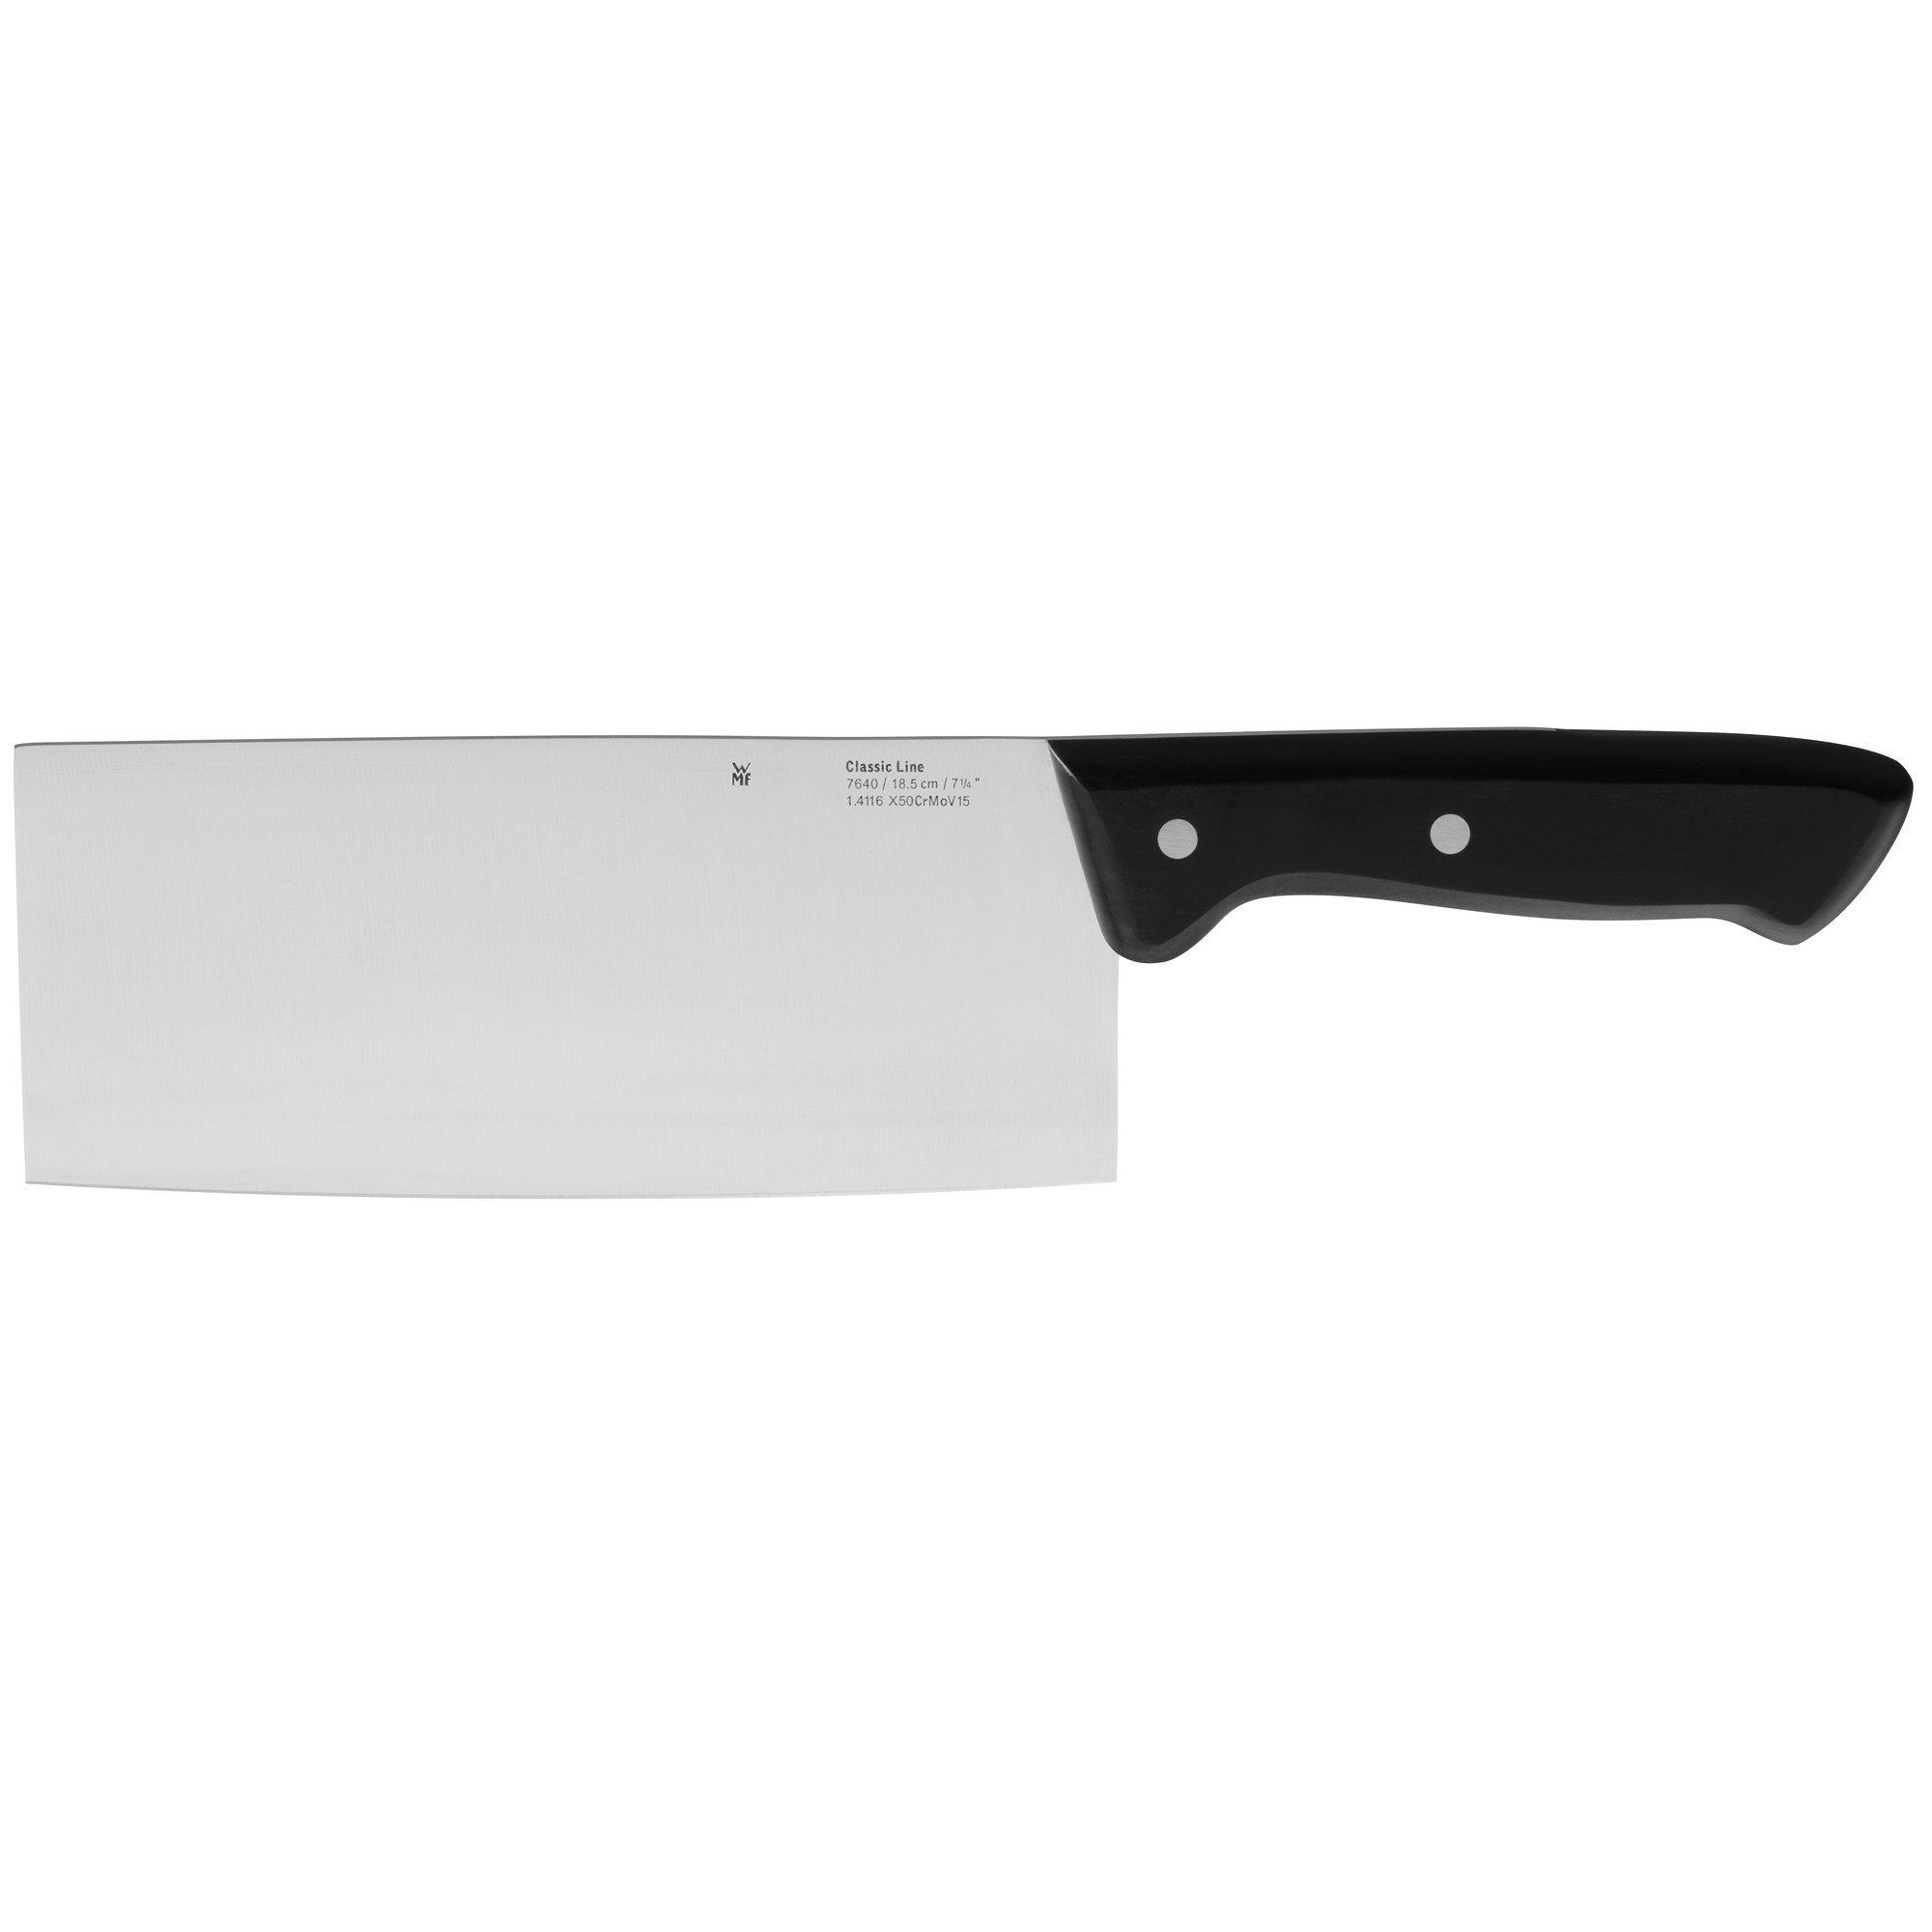 WMF Поварские ножи Classic Line, Classic Line (Gesamtlänge 31,5 cm, Klinge 18,5 cm)